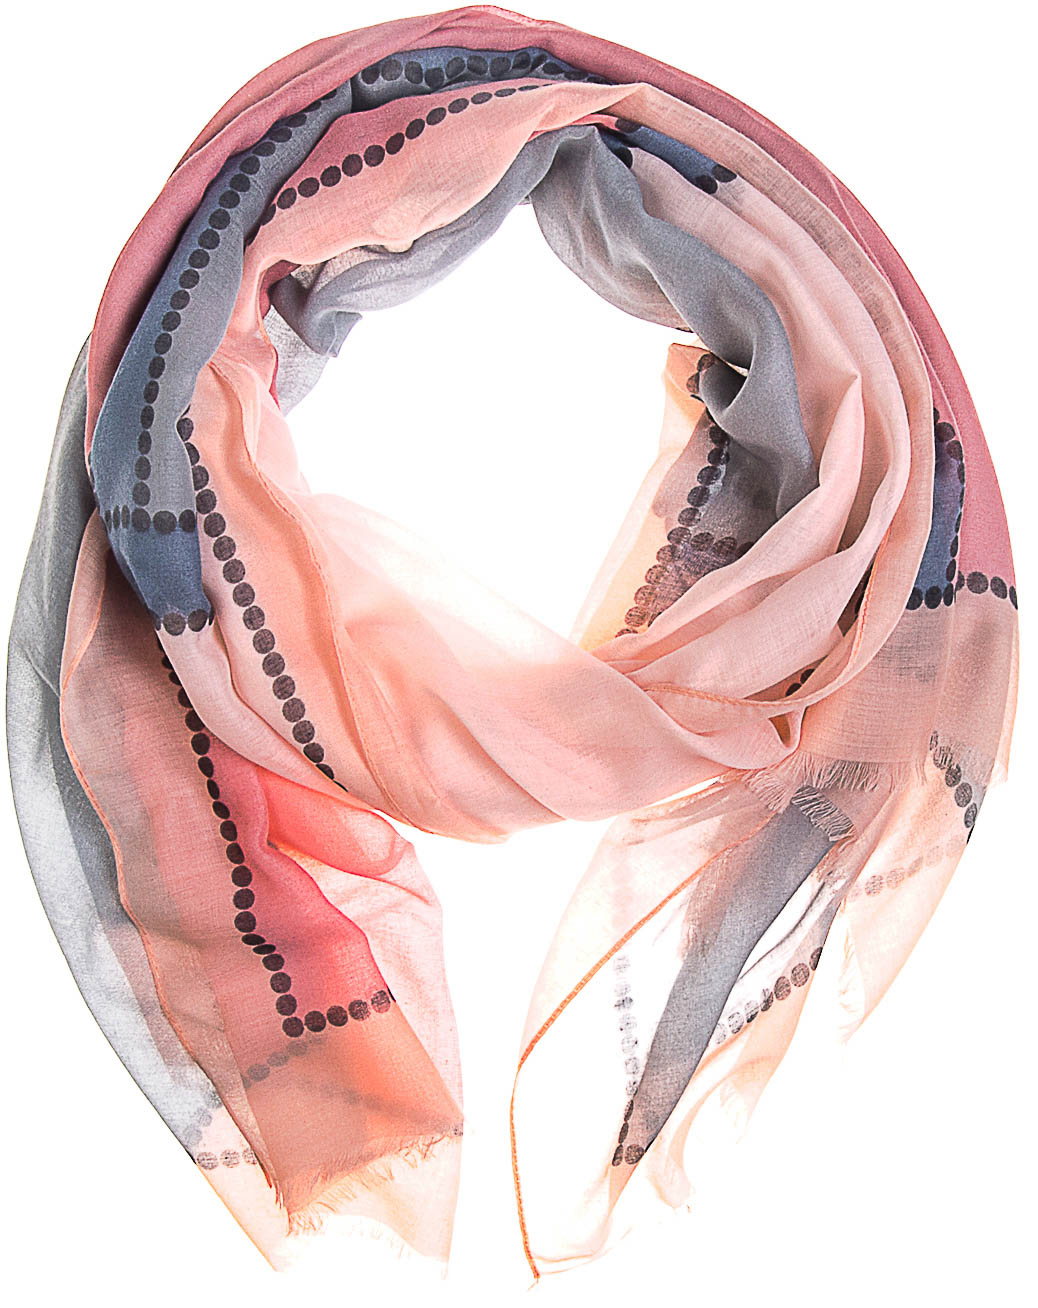 Палантин женский Vittorio Richi, цвет: розовый, серый. KXV6604. Размер 180 х 90 см